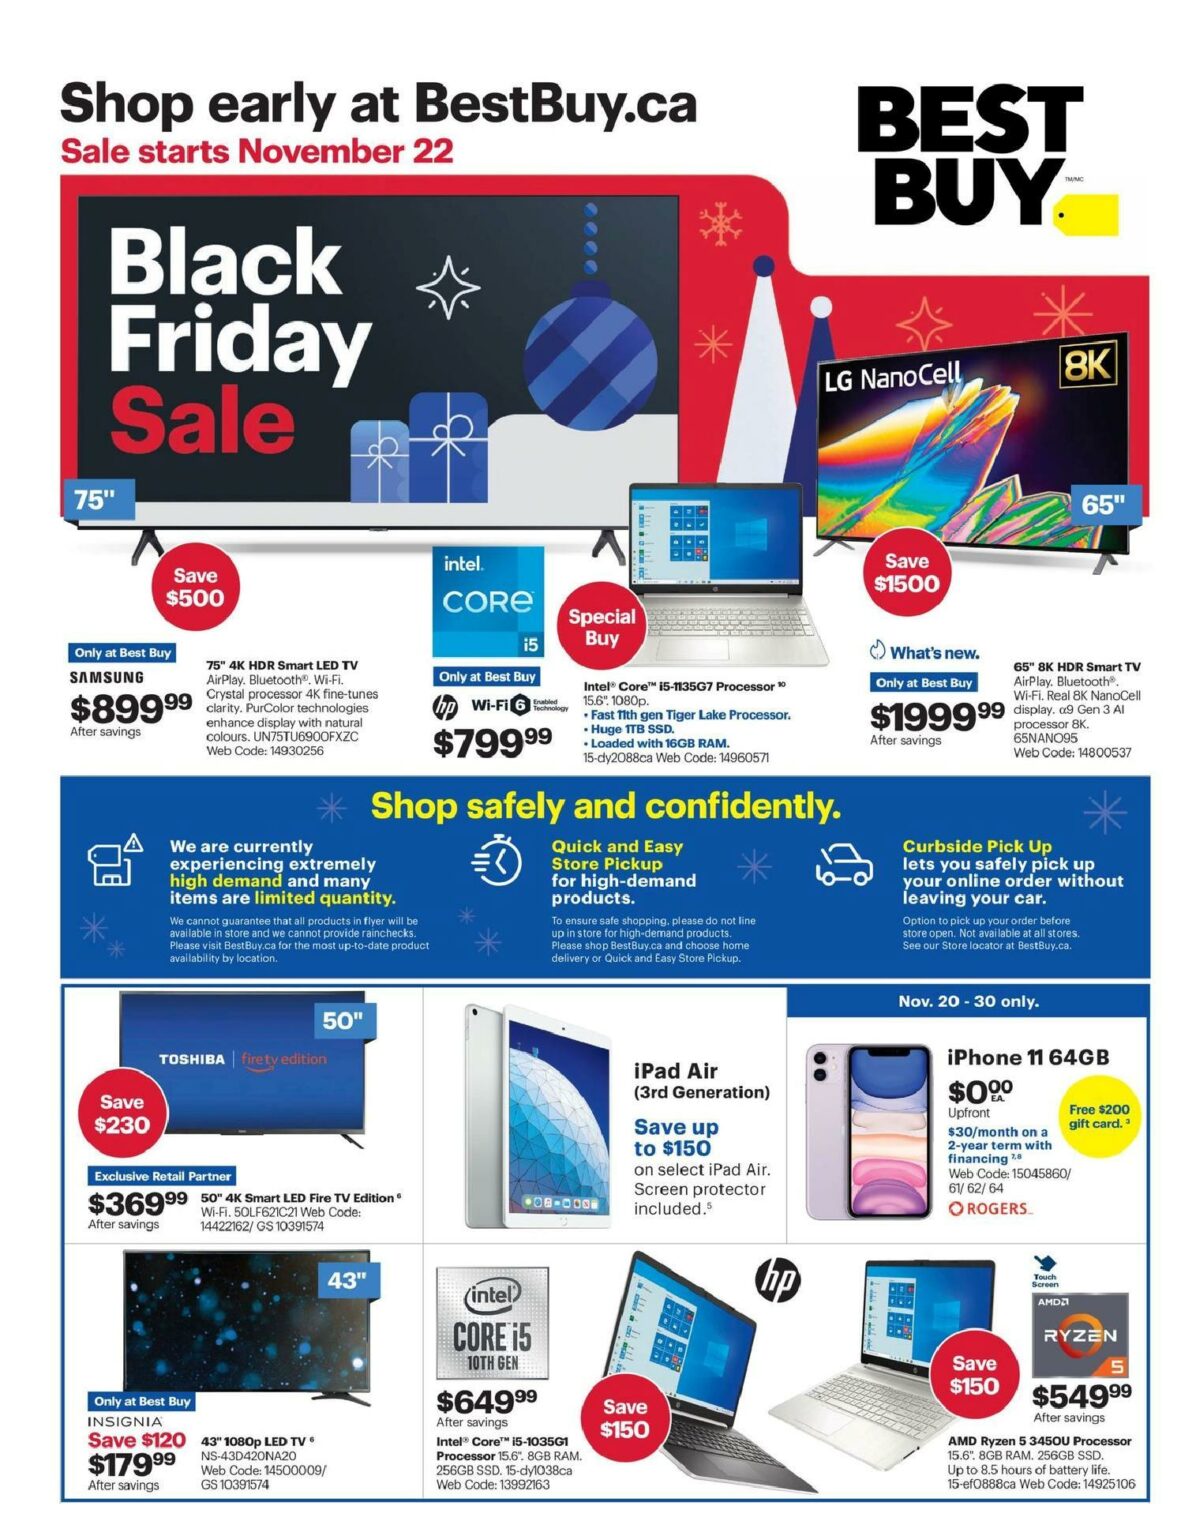 Best Buy Black Friday Flyer Deals 2020 Canada - How To Get Bestbuy Black Friday Deals